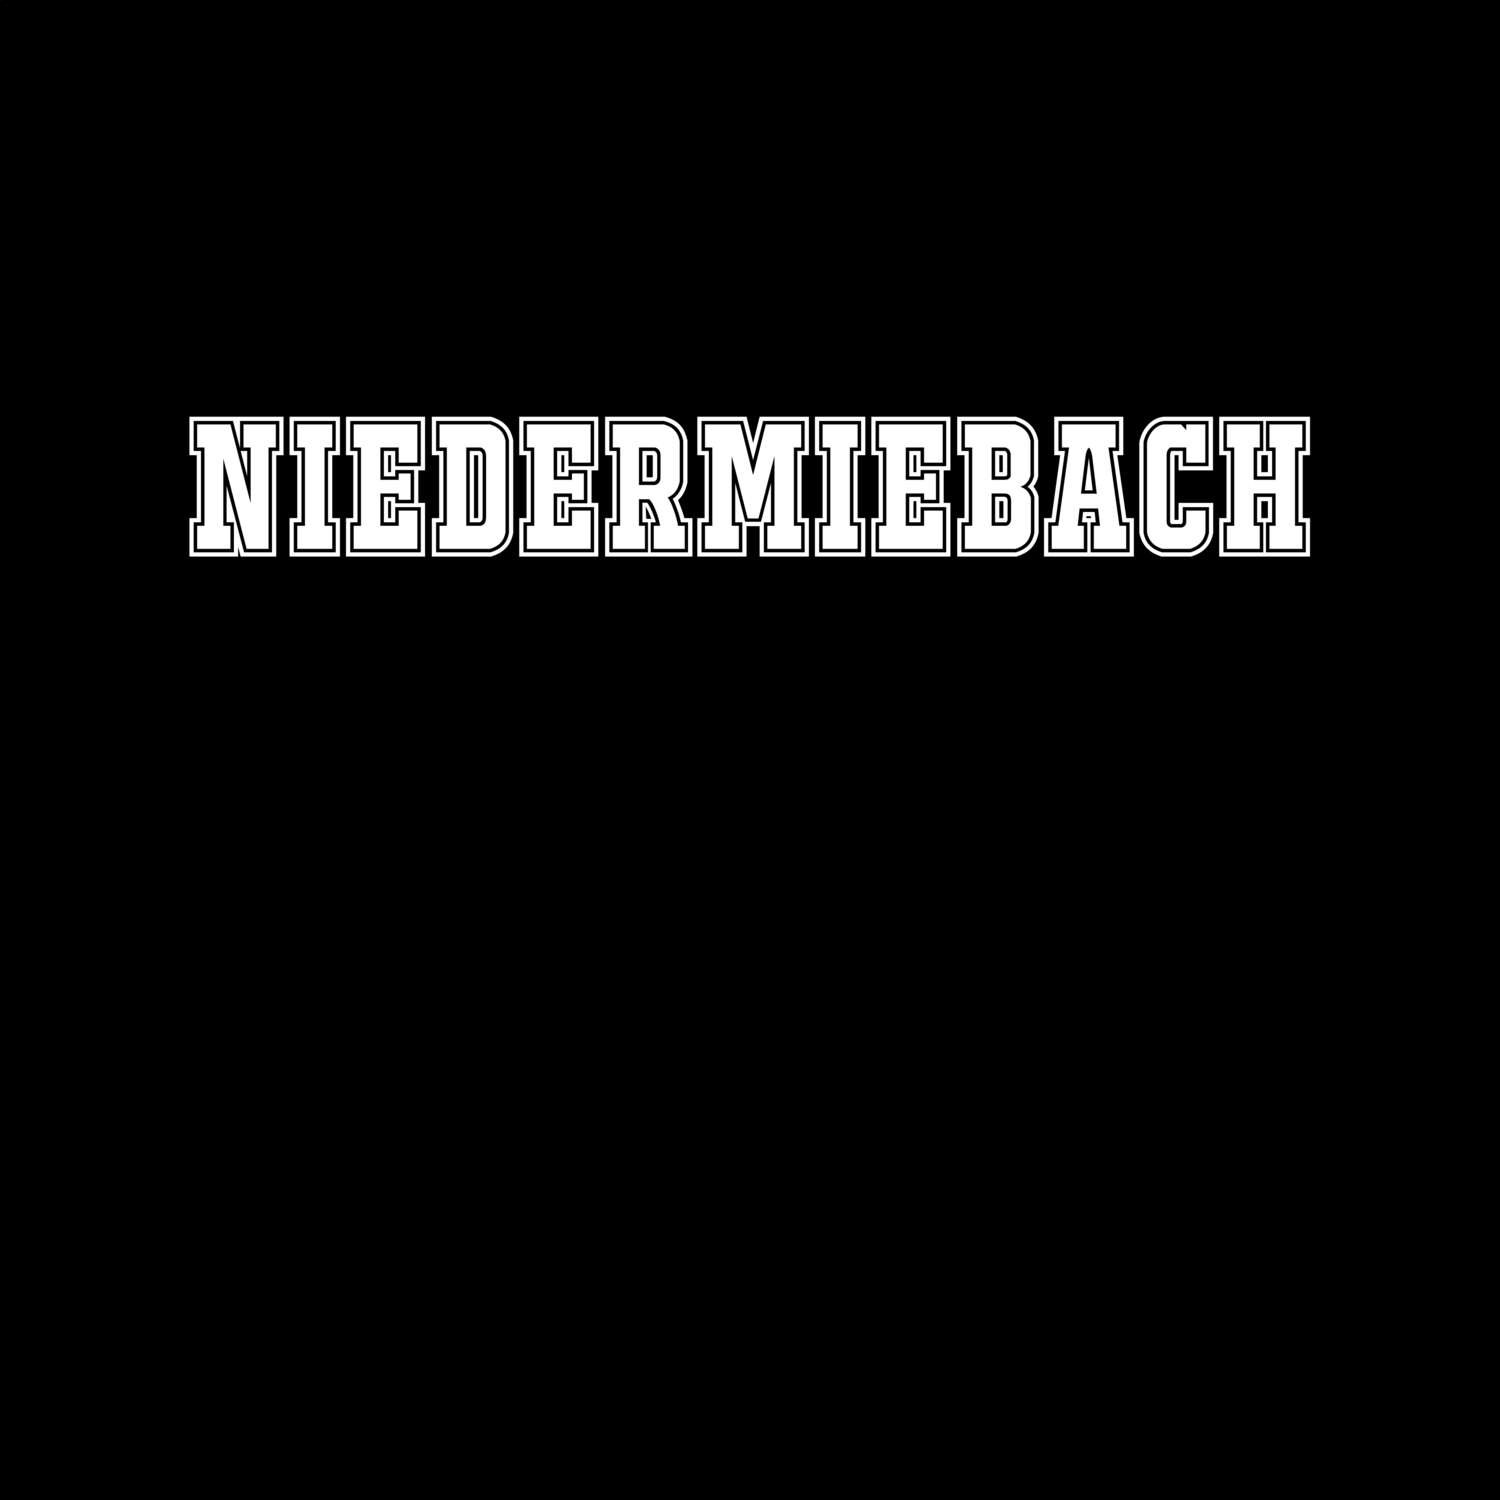 Niedermiebach T-Shirt »Classic«